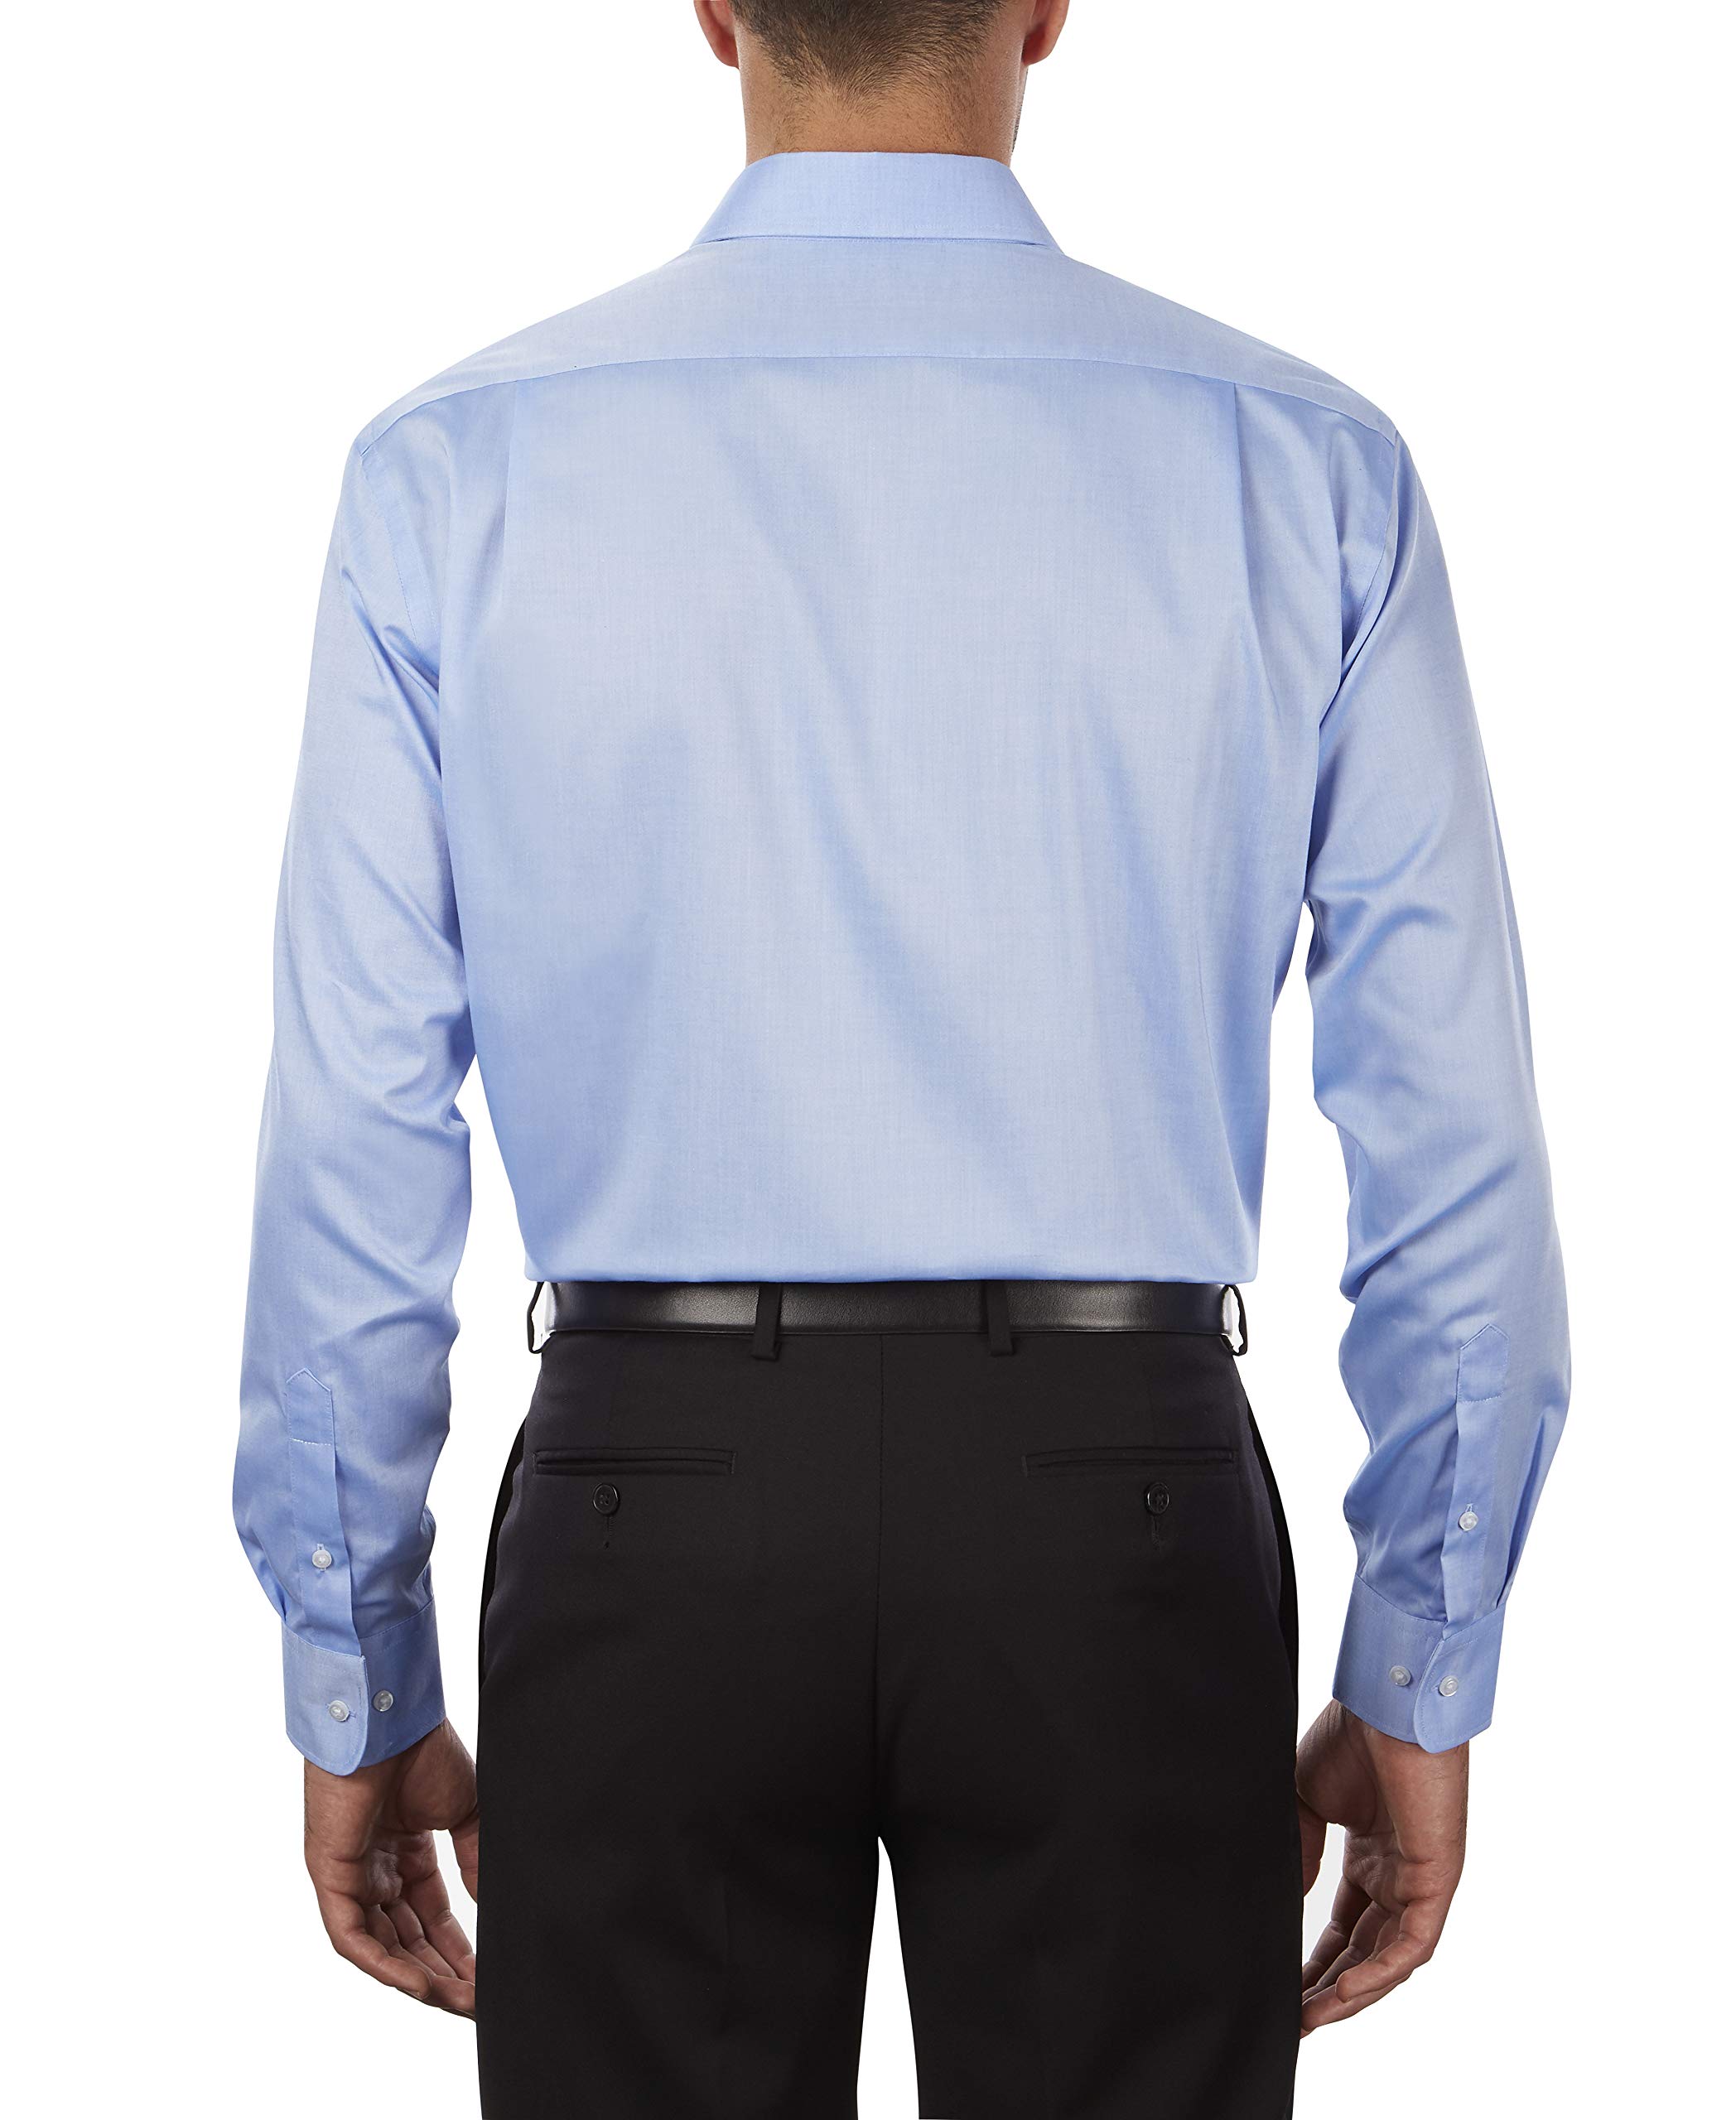 Tommy Hilfiger Men's Dress Shirt Regular Fit Non Iron Solid, Blue, 16.5" Neck 34"-35" Sleeve